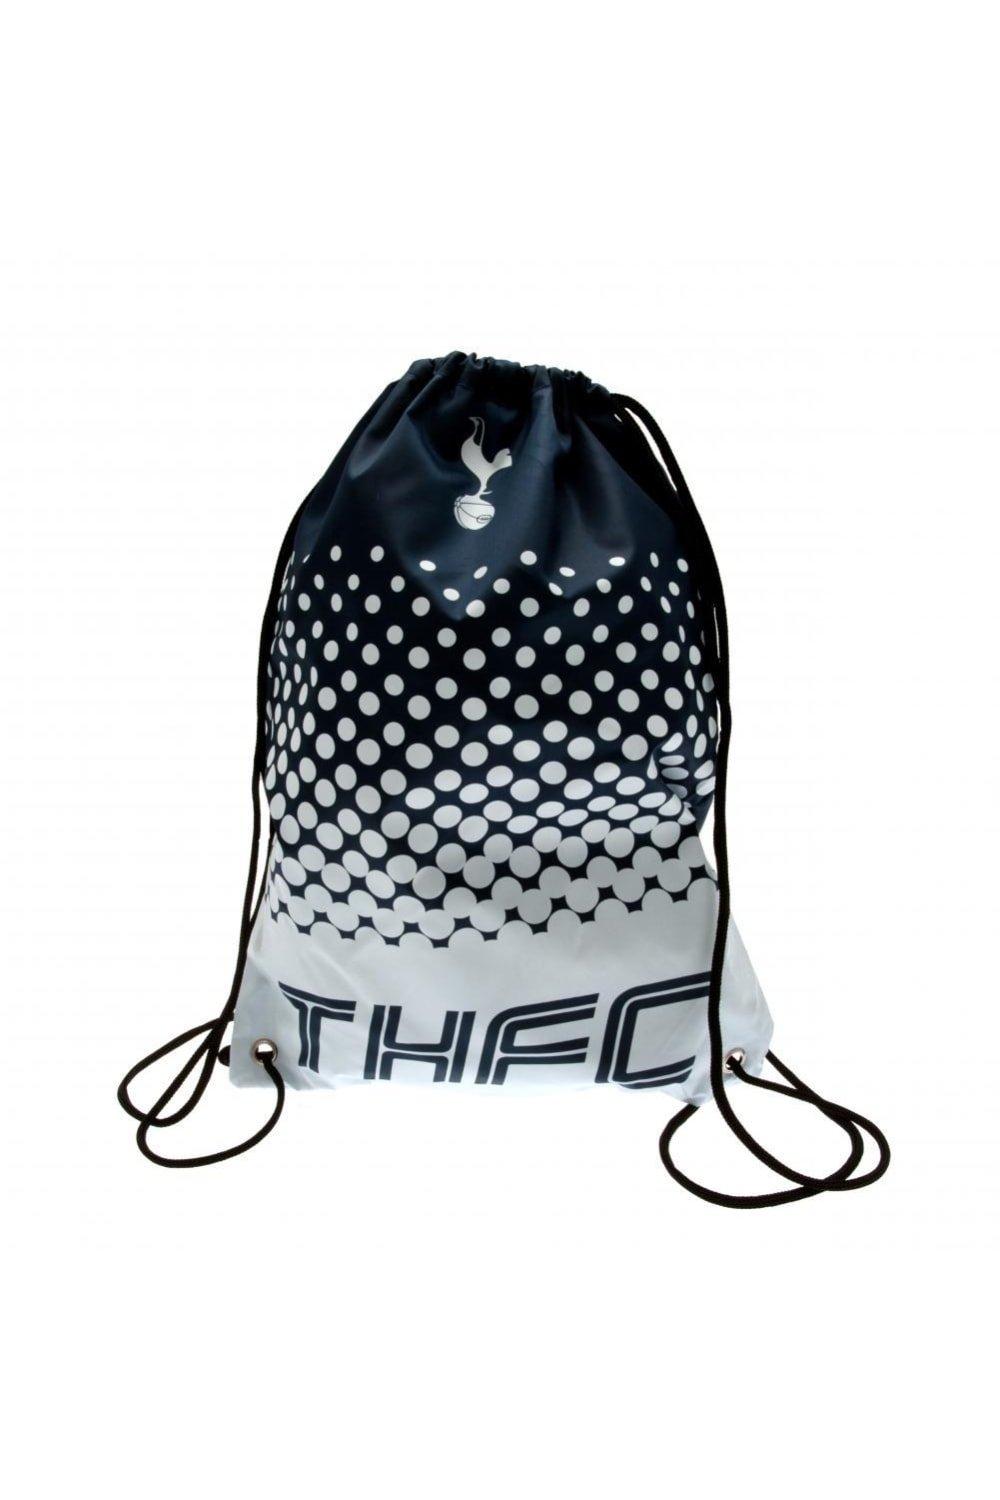 Спортивная сумка Fade Design на шнурке Tottenham Hotspur FC, темно-синий